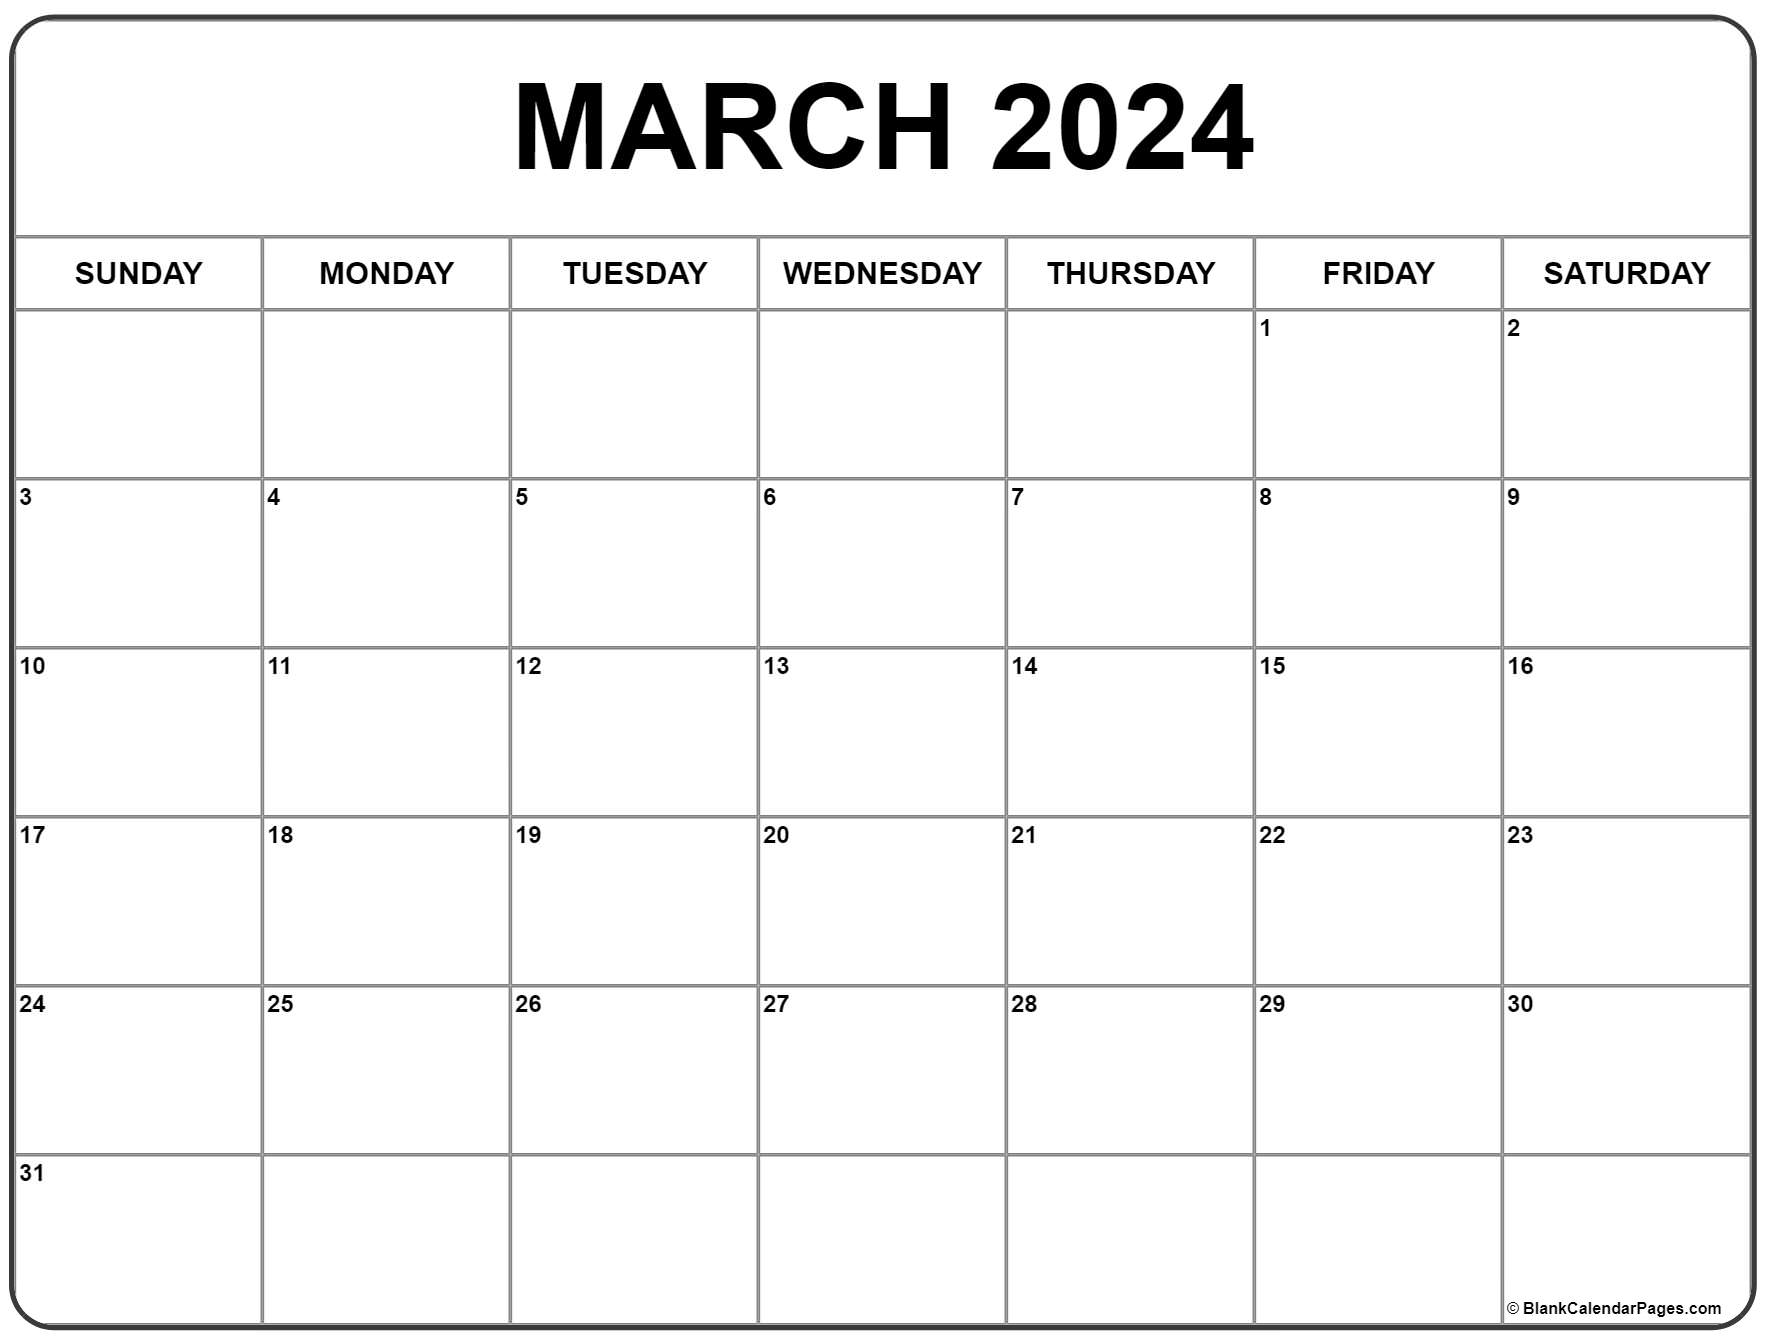 March 2024 Calendar | Free Printable Calendar for Monthly Calendar March 2024 Printable